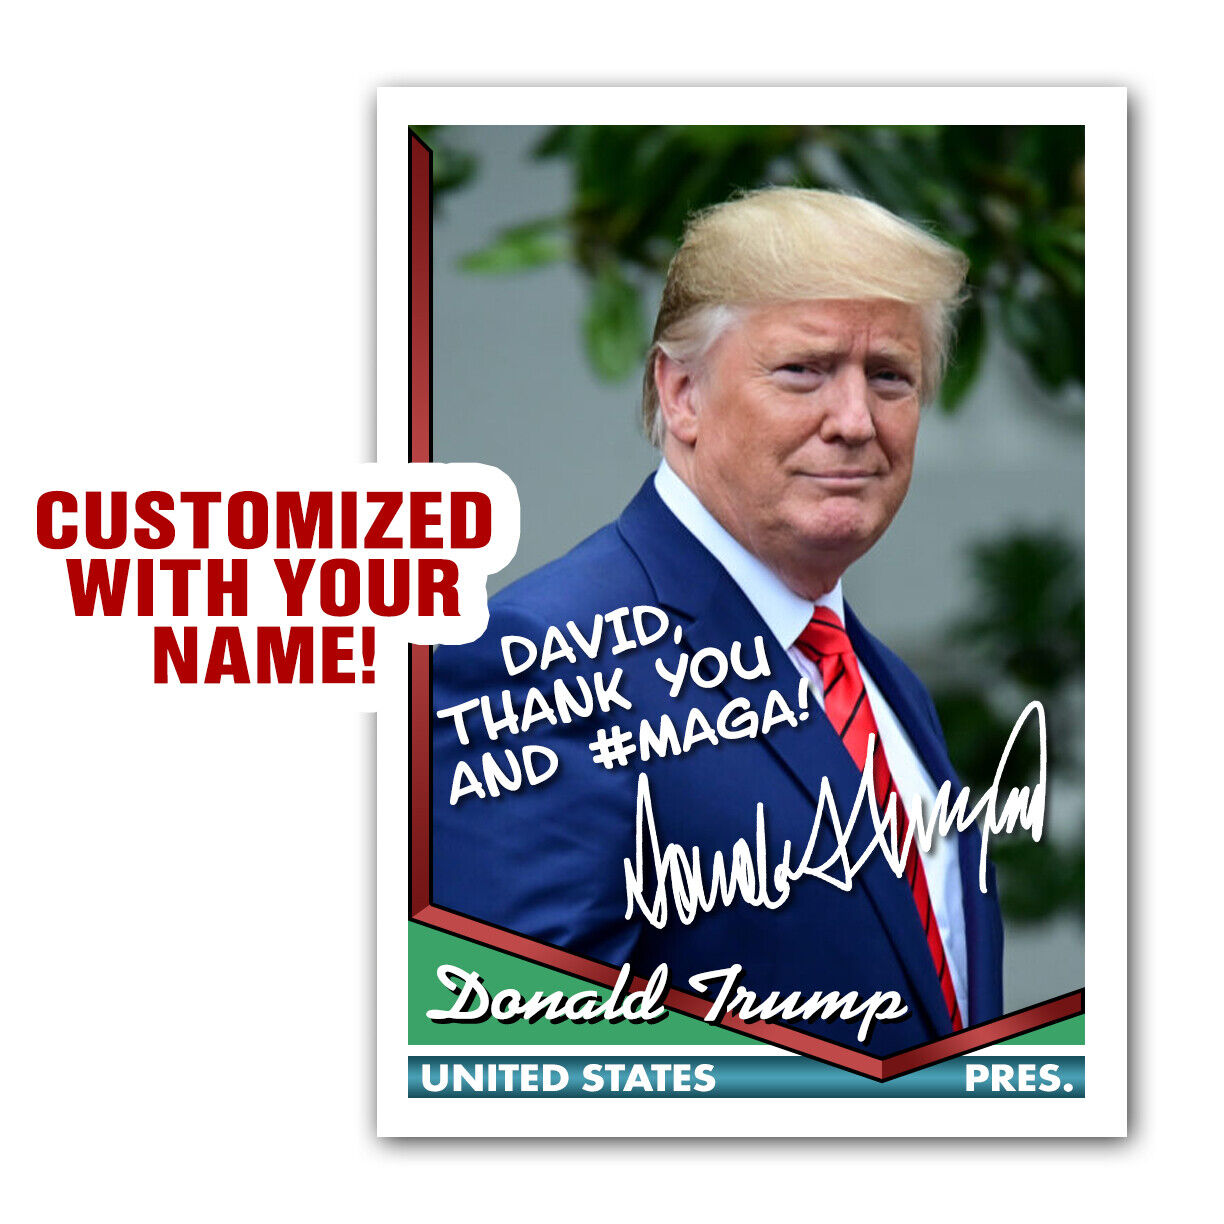 Donald Trump CUSTOM AUTOGRAPH Presidential Baseball Card Signed MAGA 2020